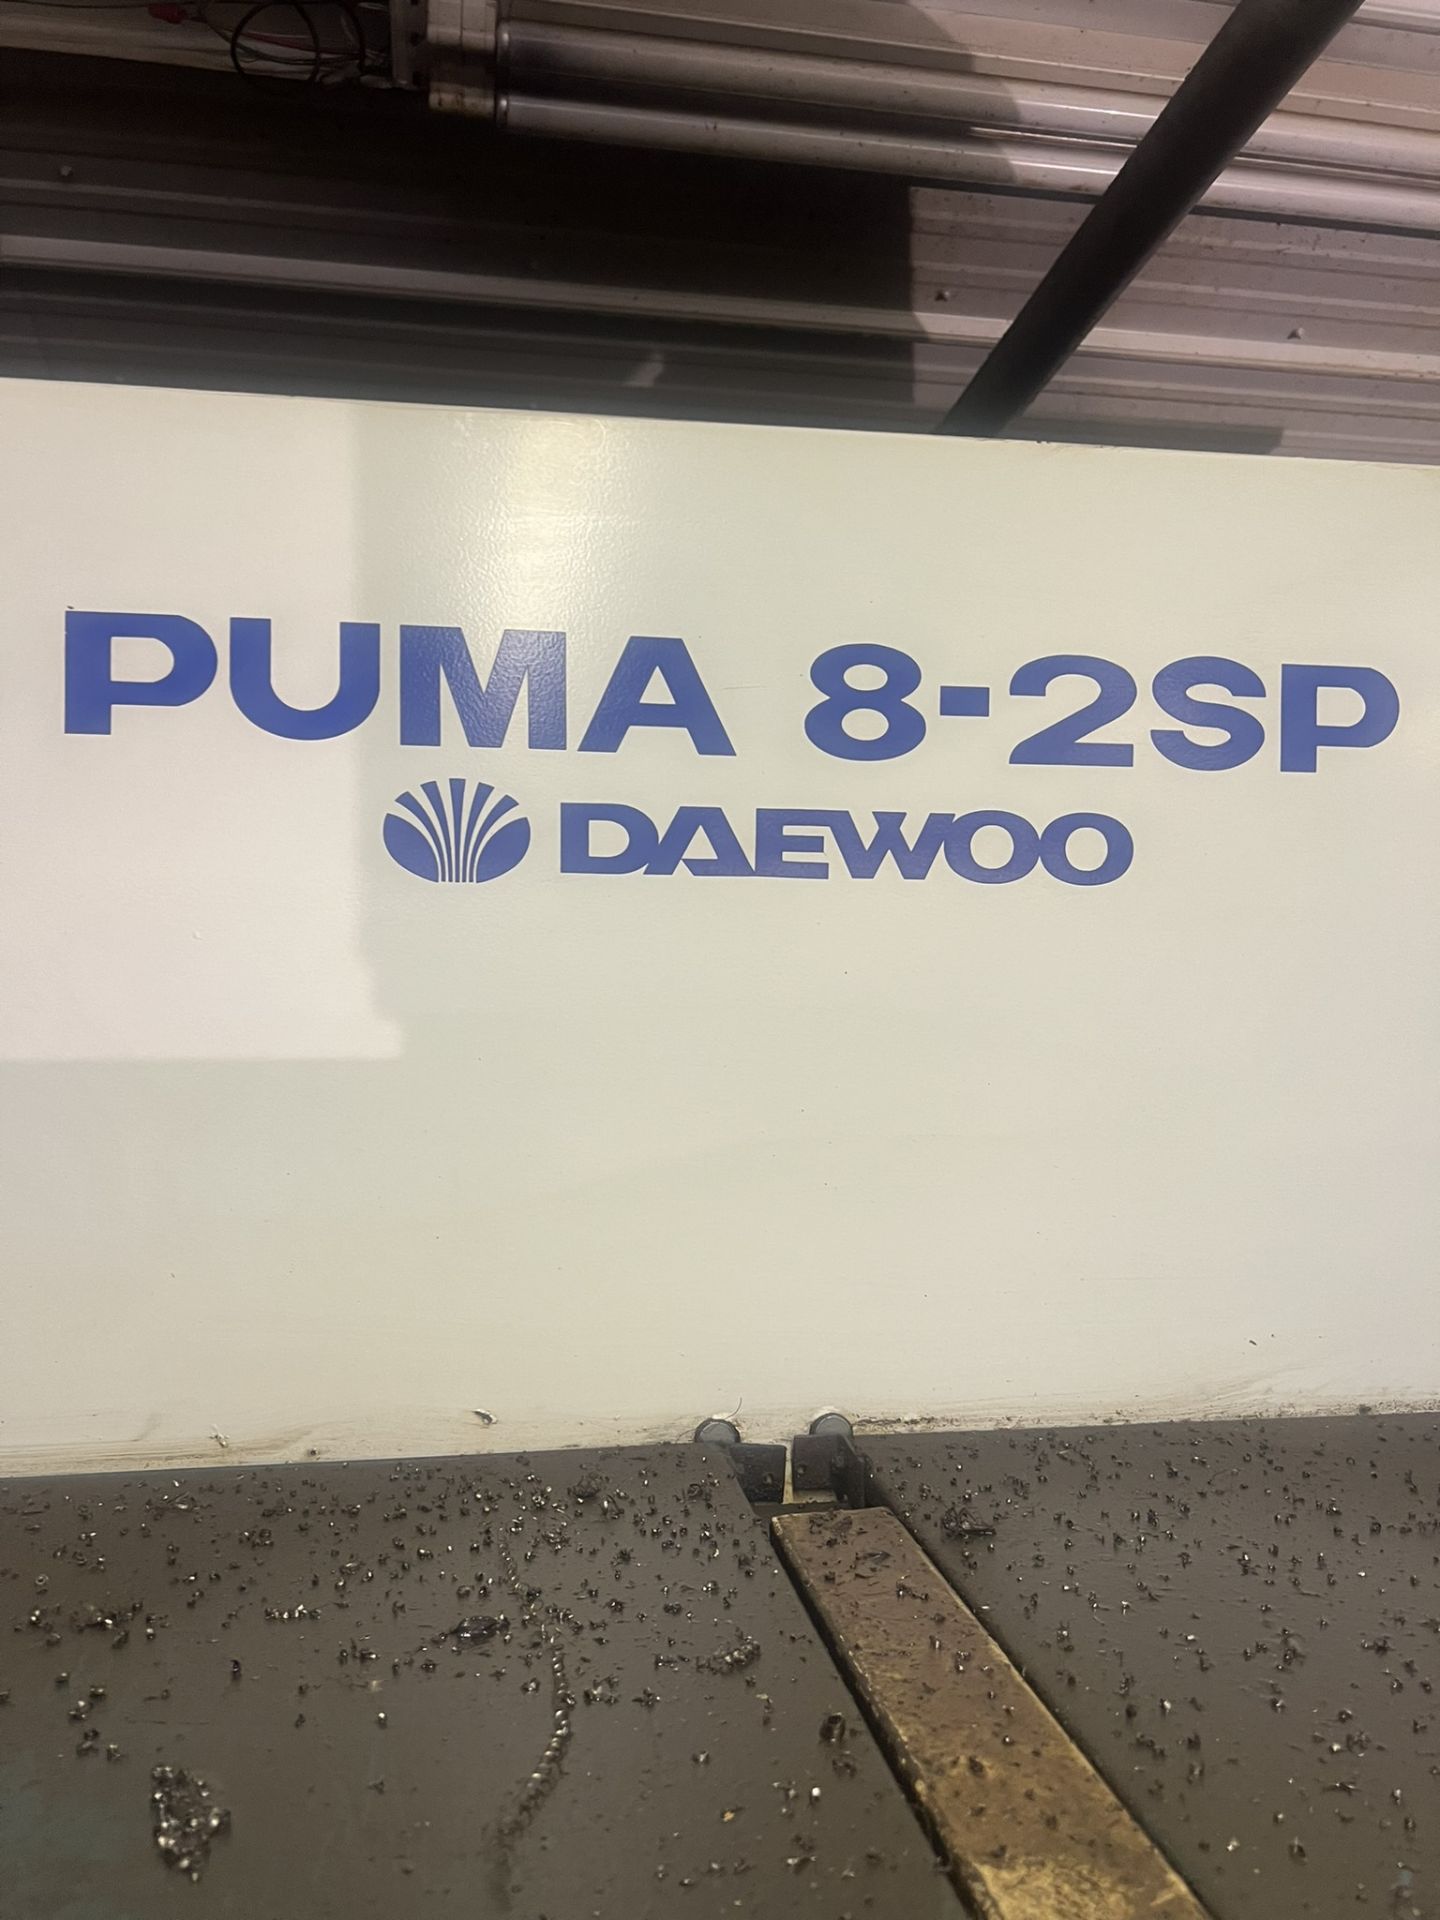 Puma 8-2sp, Daewoo, Model Puma8-2SP, Serial #2sp8-0126 with Turbo Conveyor Model 6287-8218, serial# - Image 2 of 12